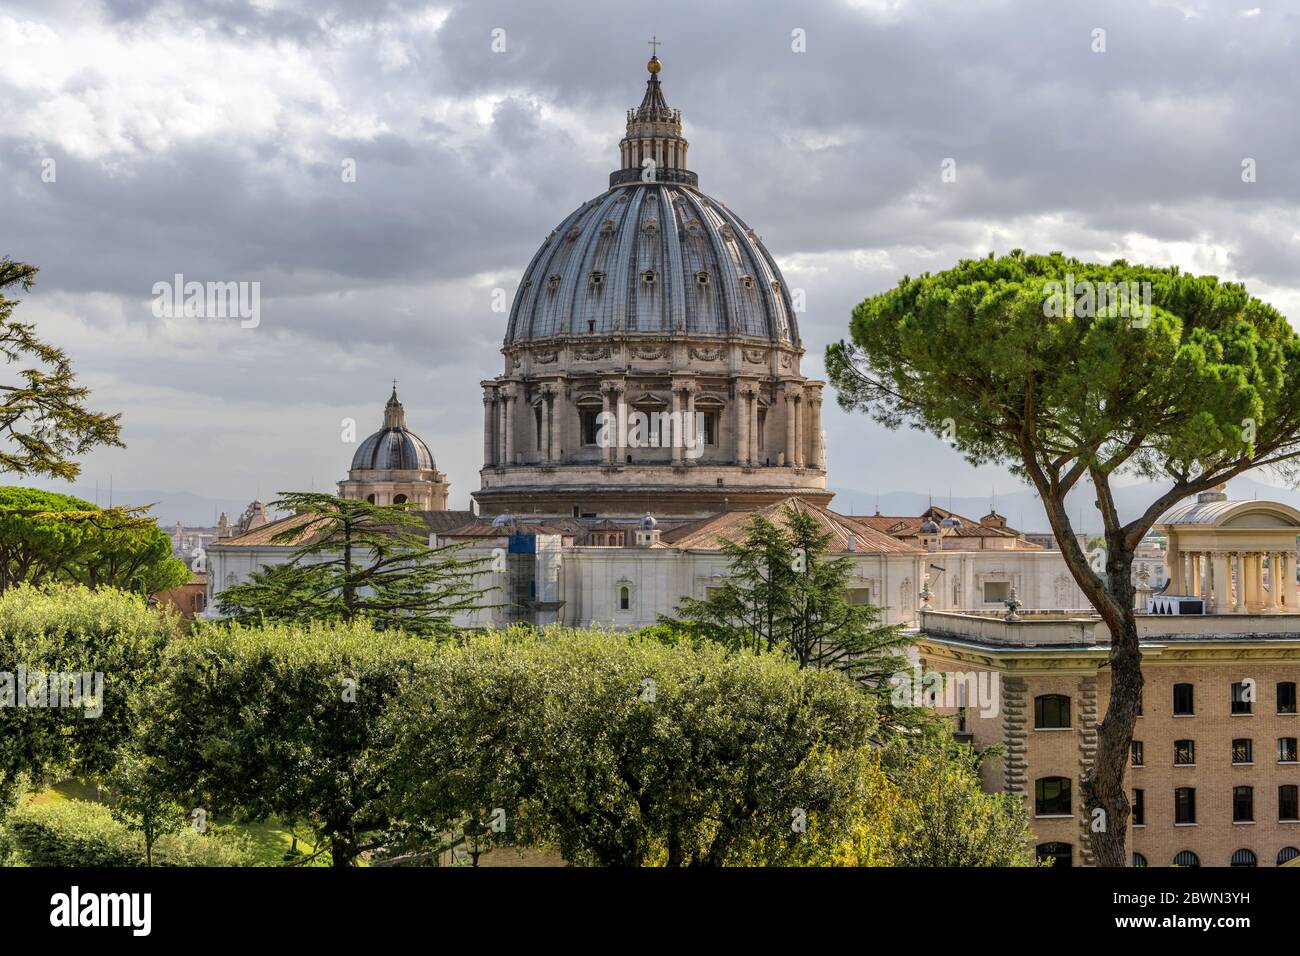 Basilica di San Pietro - una vista mattutina nuvolosa della Basilica di San Pietro, vista dai Giardini Vaticani, a Roma, Italia. Foto Stock